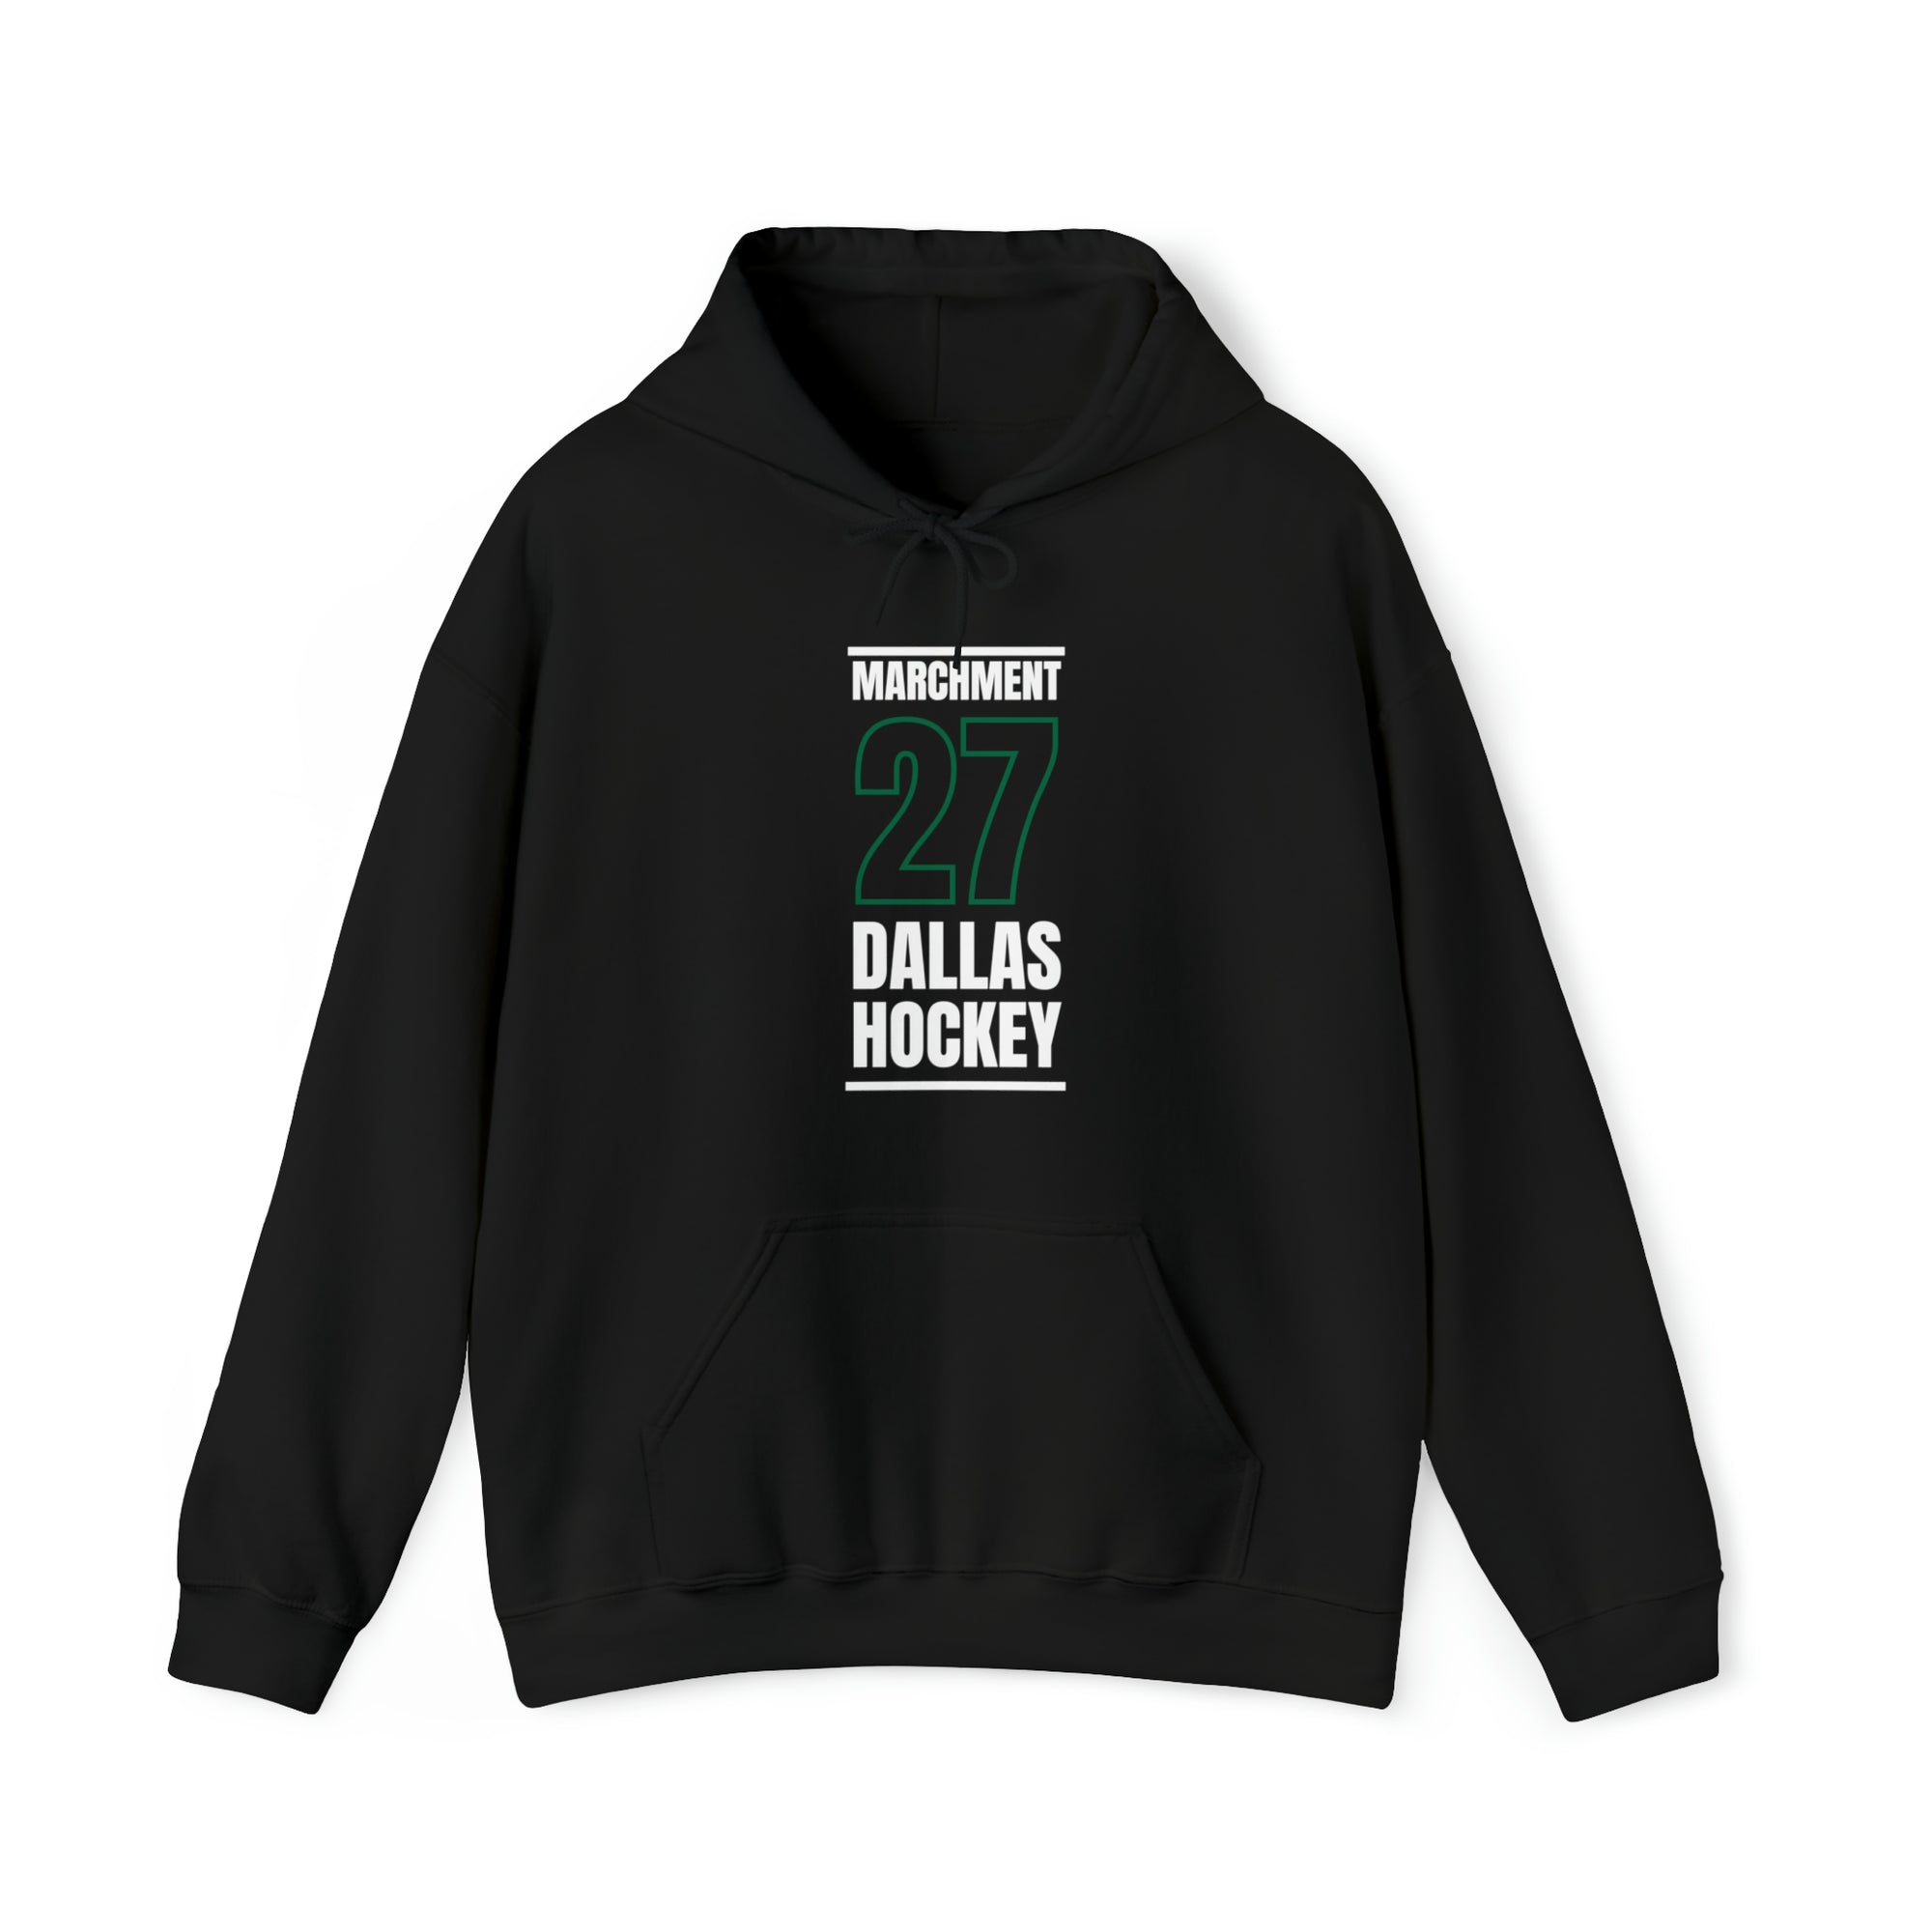 Marchment 27 Dallas Hockey Black Vertical Design Unisex Hooded Sweatshirt